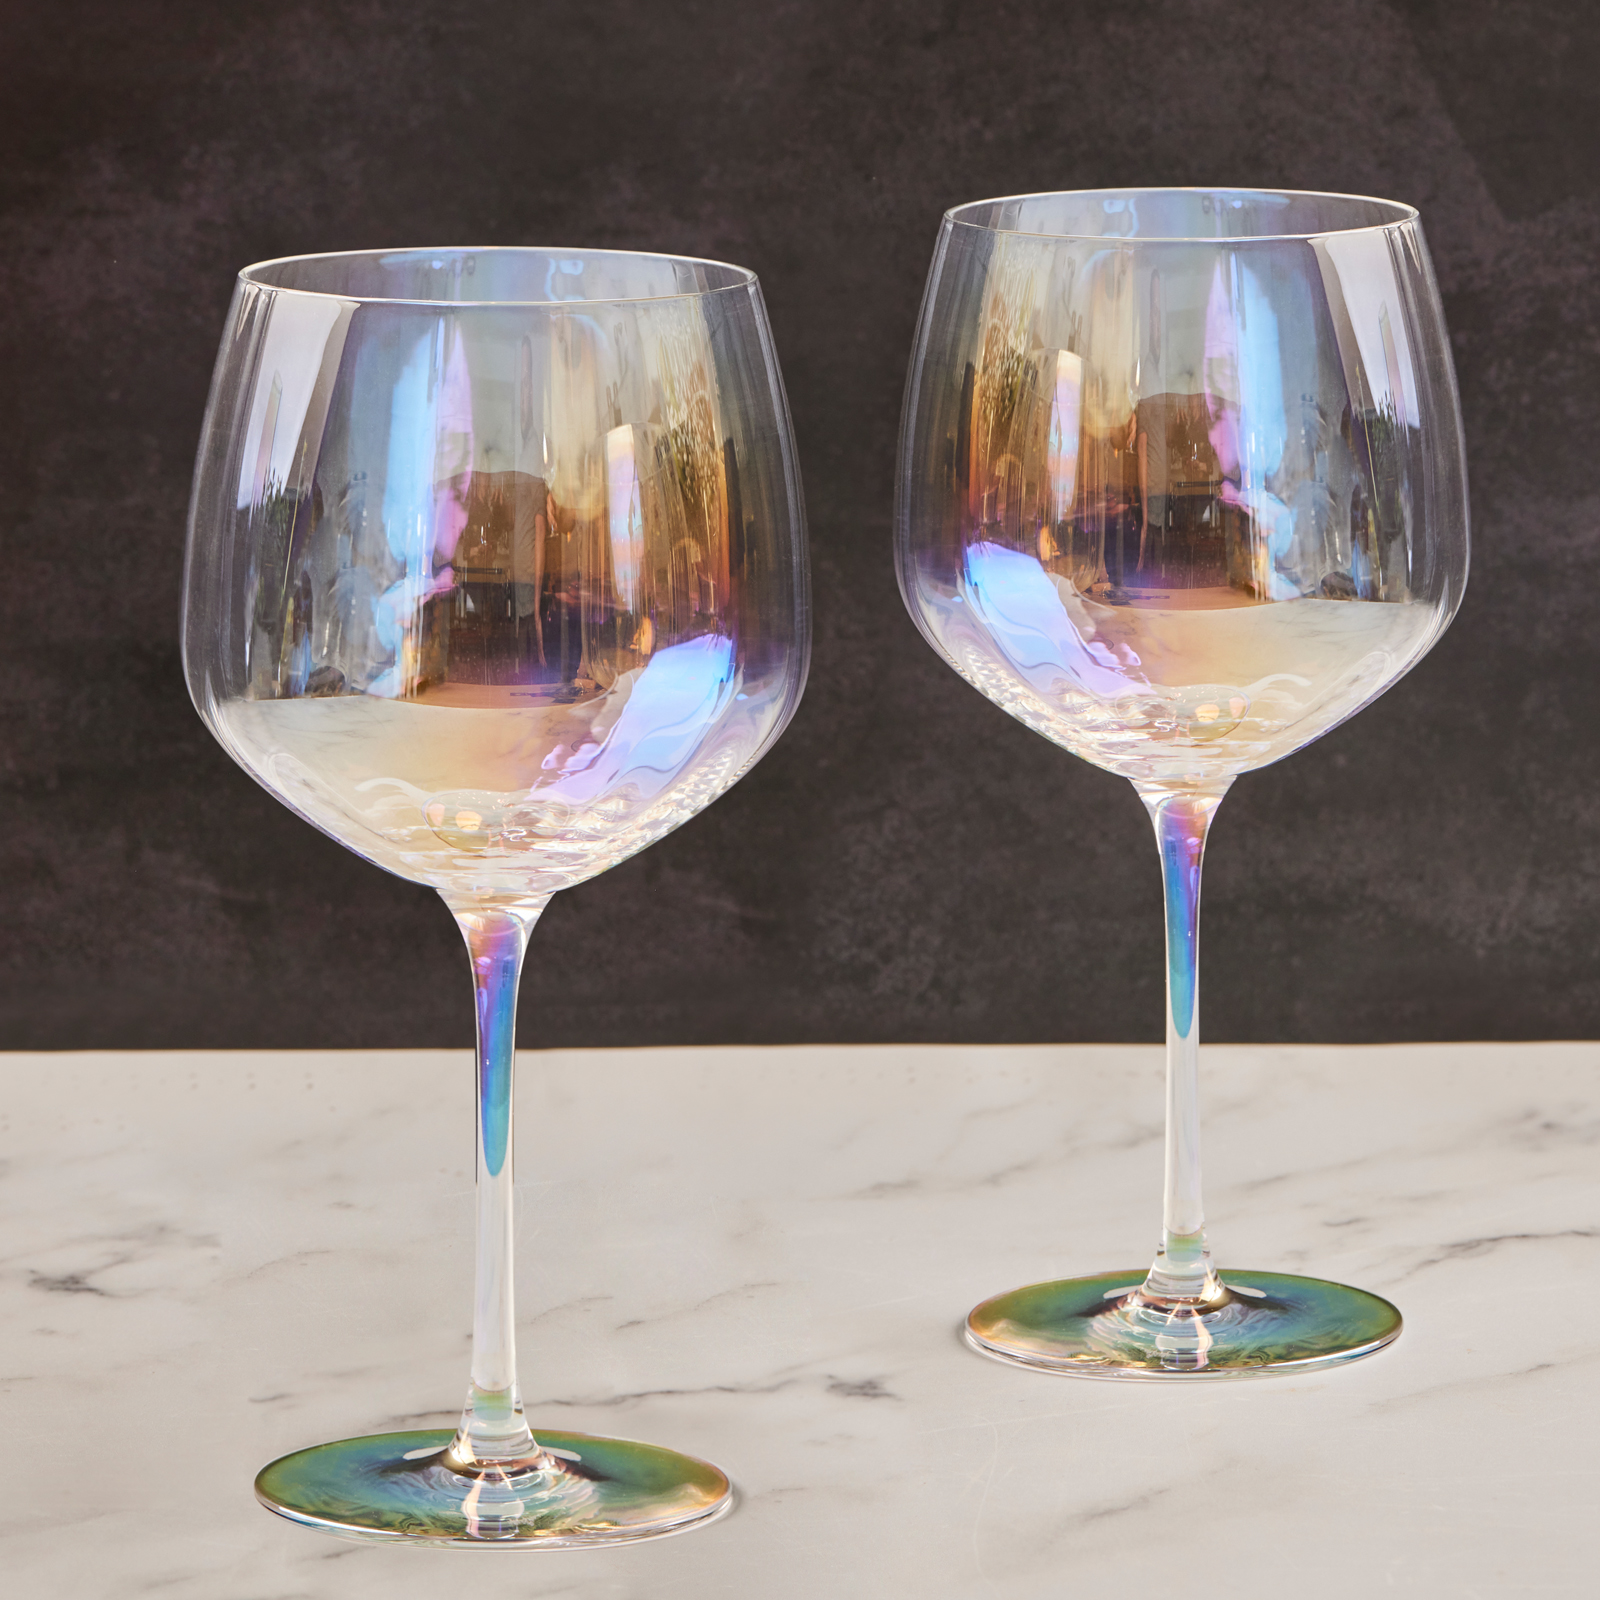 Set of 2 Palazzo Wine Glasses